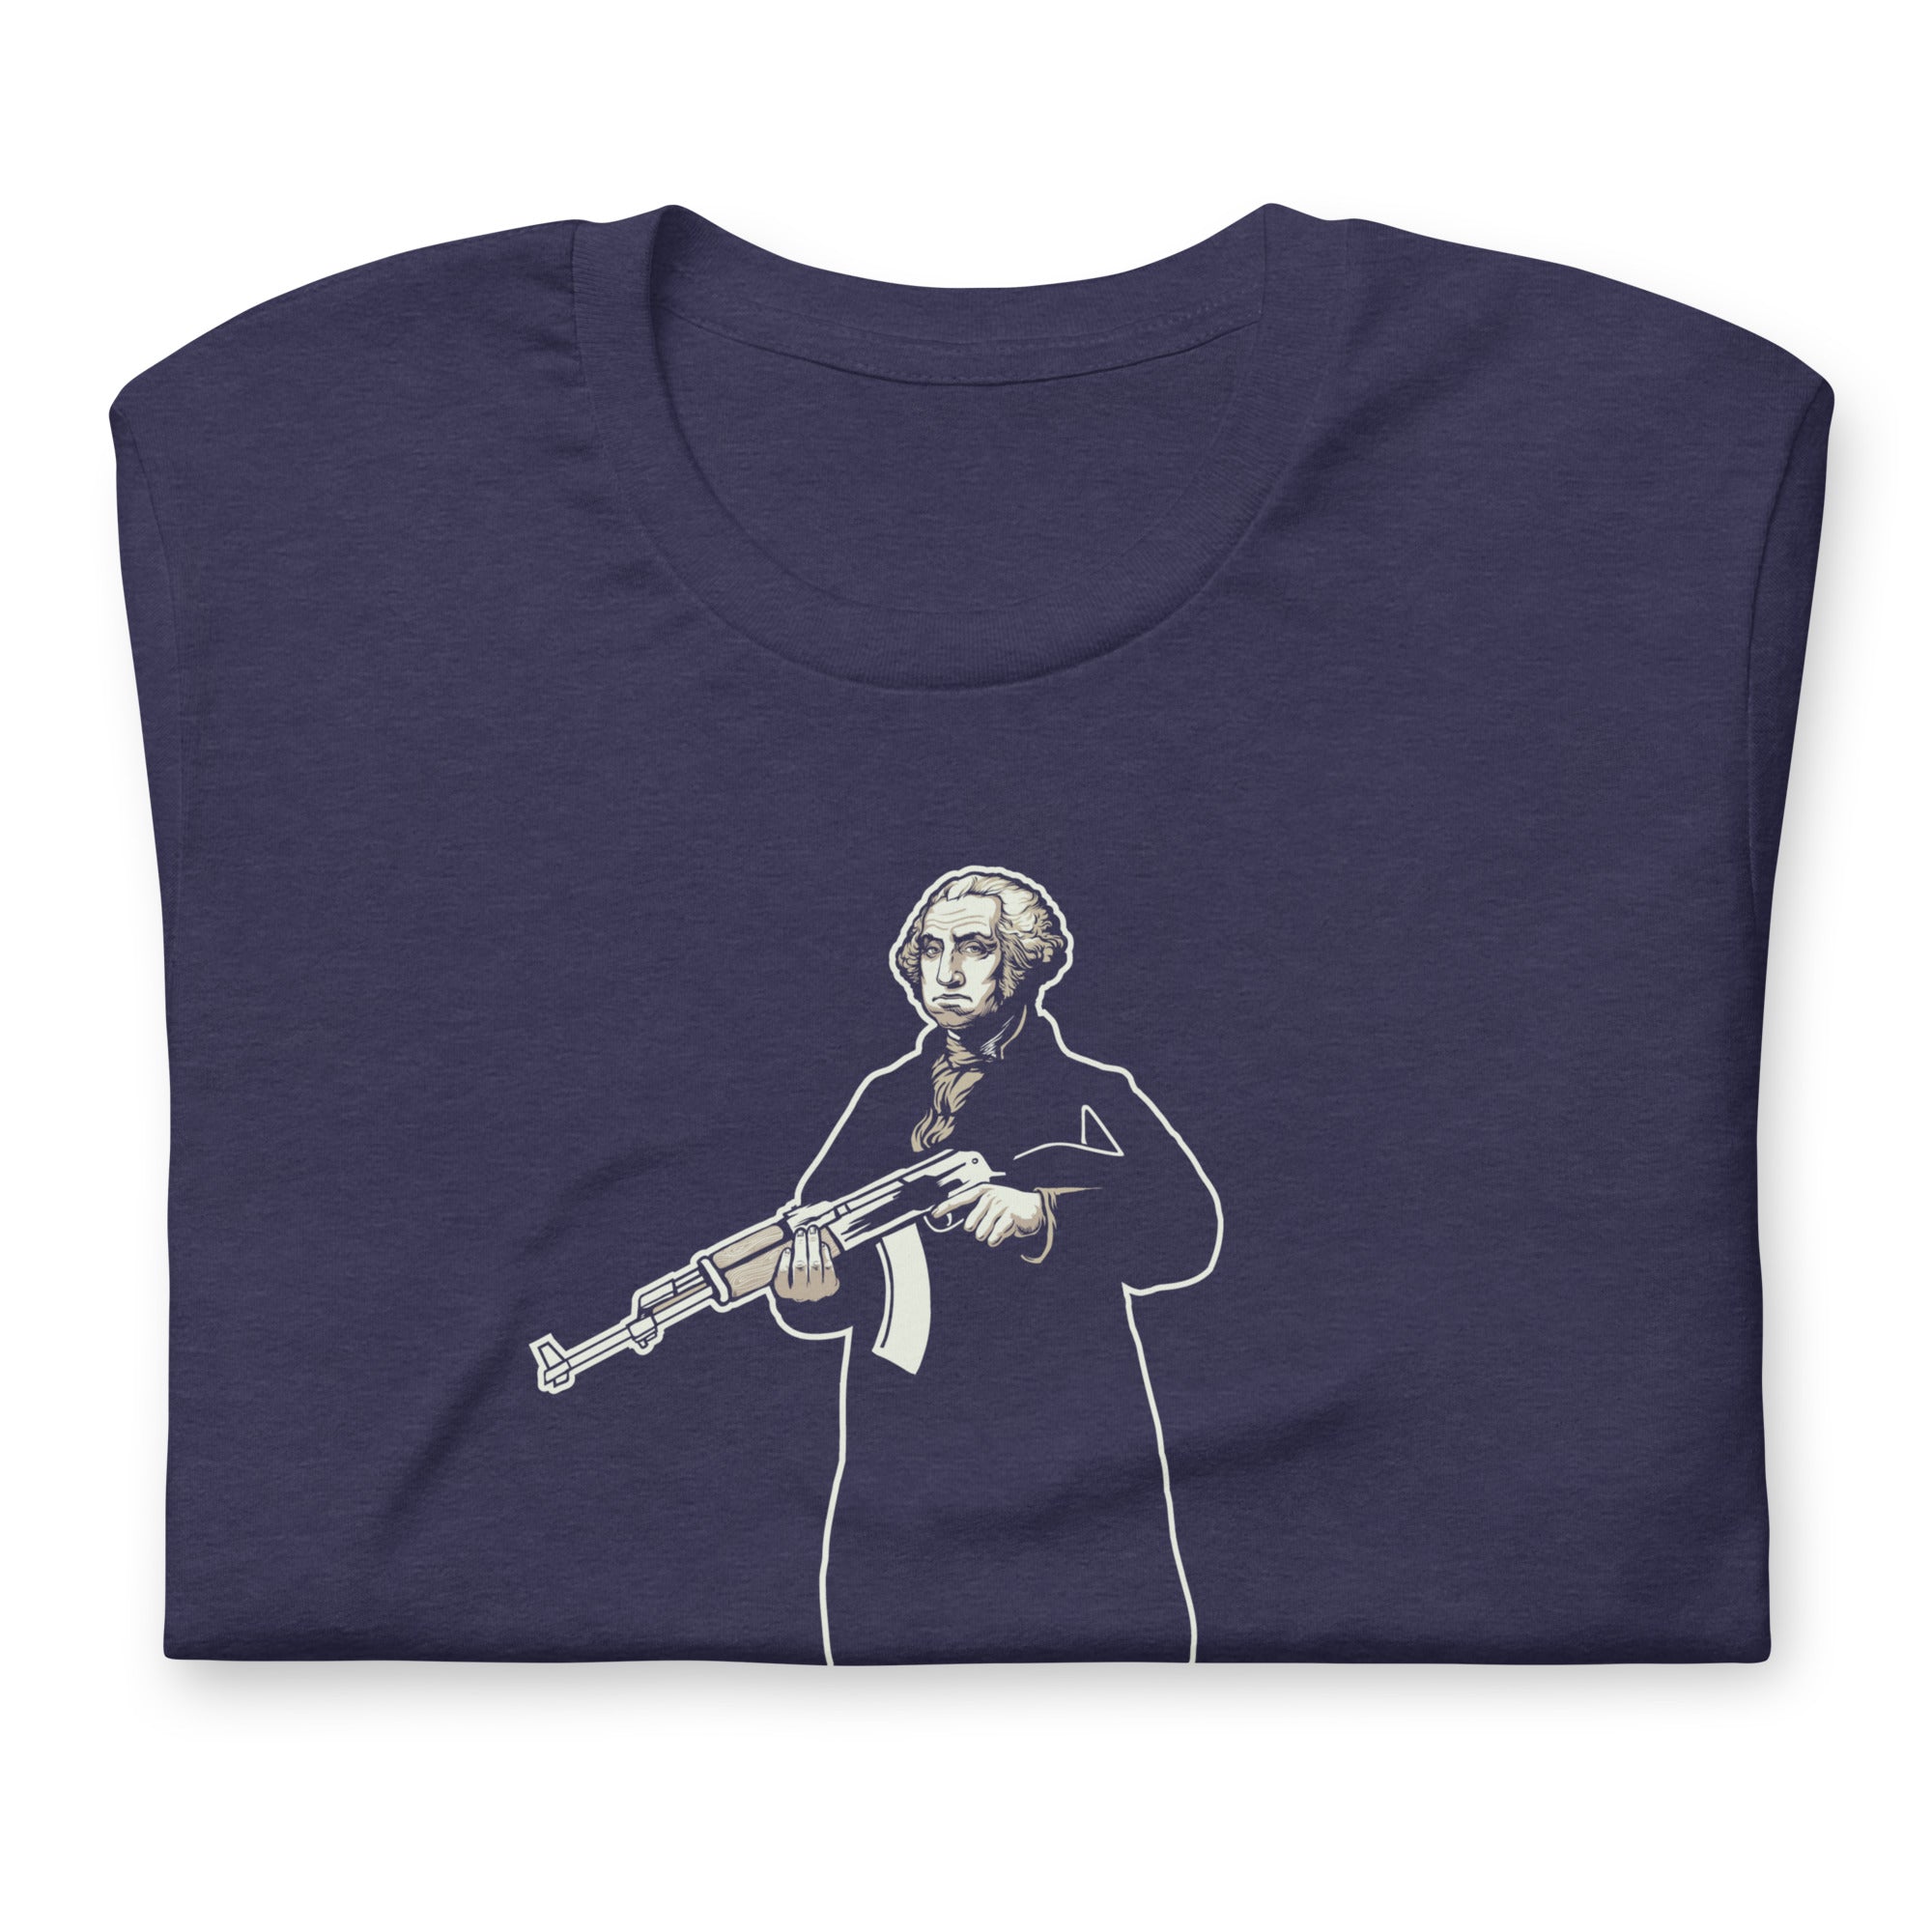 George Washington With an AK47 T-Shirt